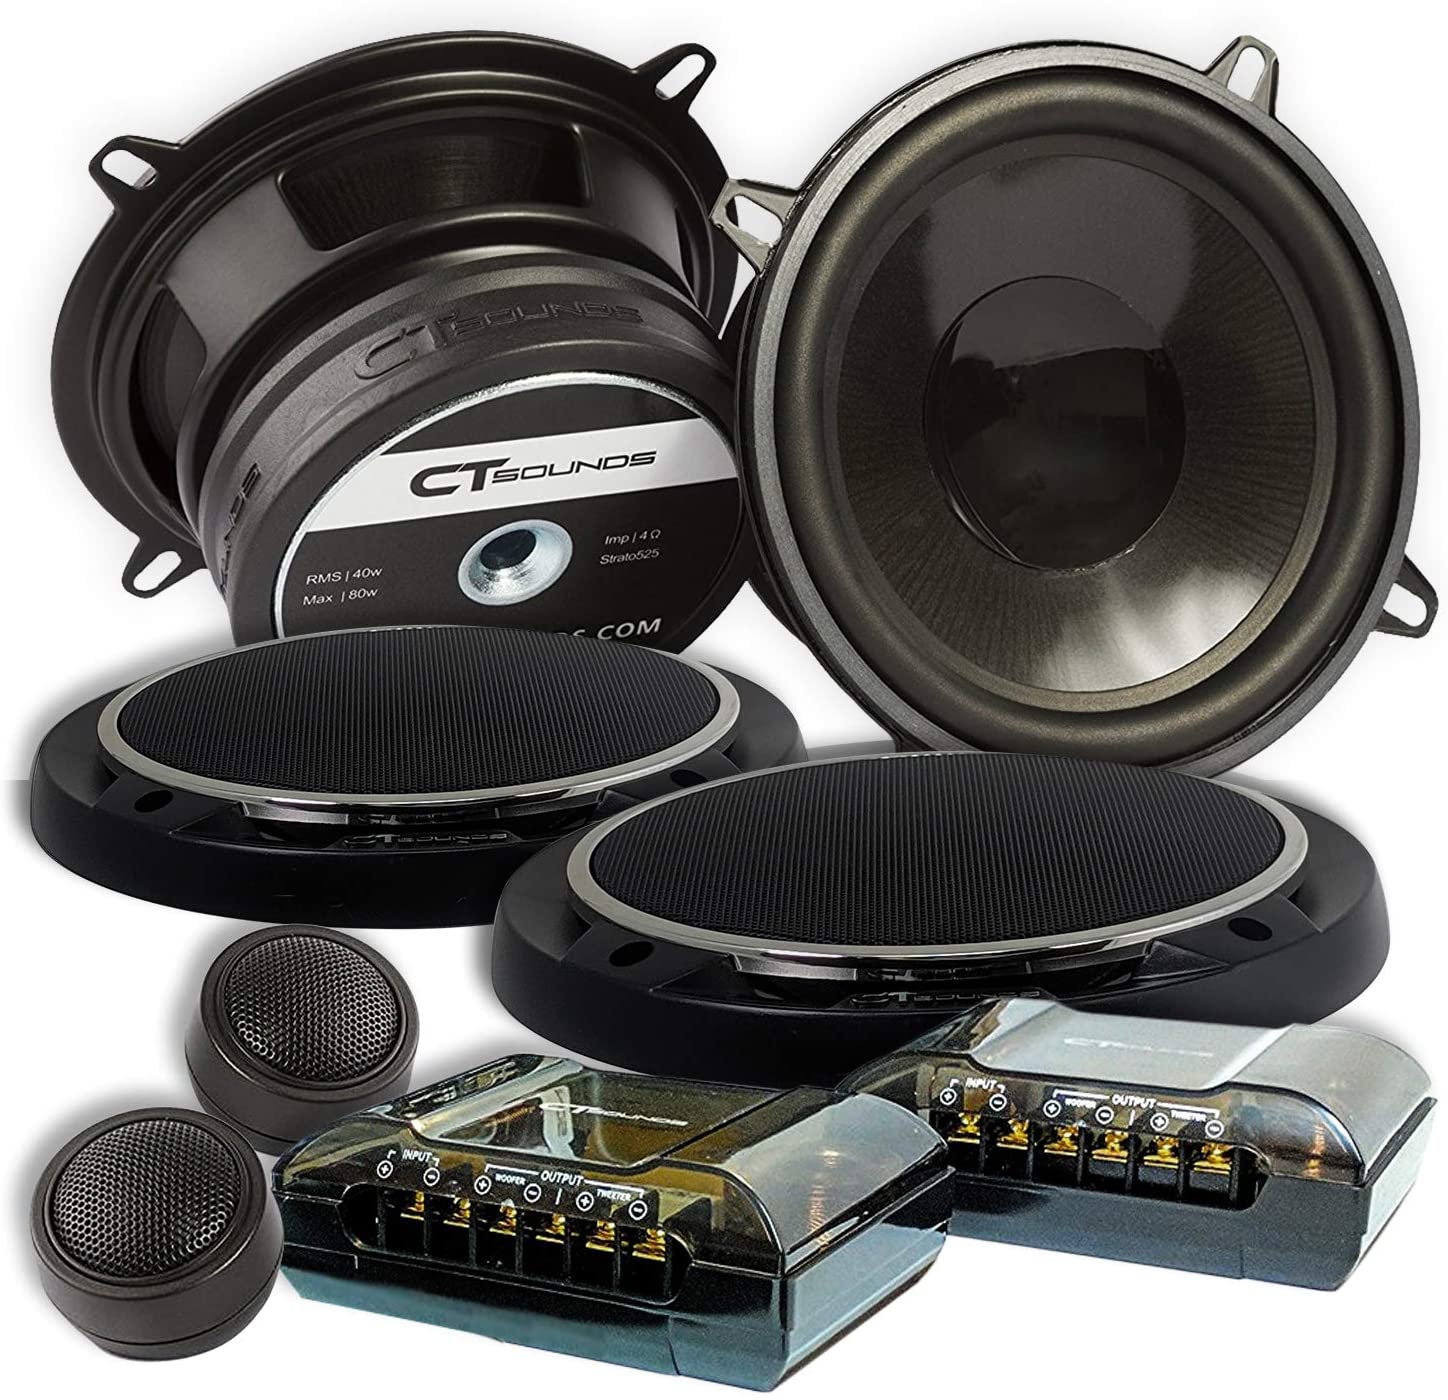 CT Sounds Full-Range Component Speakers Best 6.5 Component Speakers Under $200